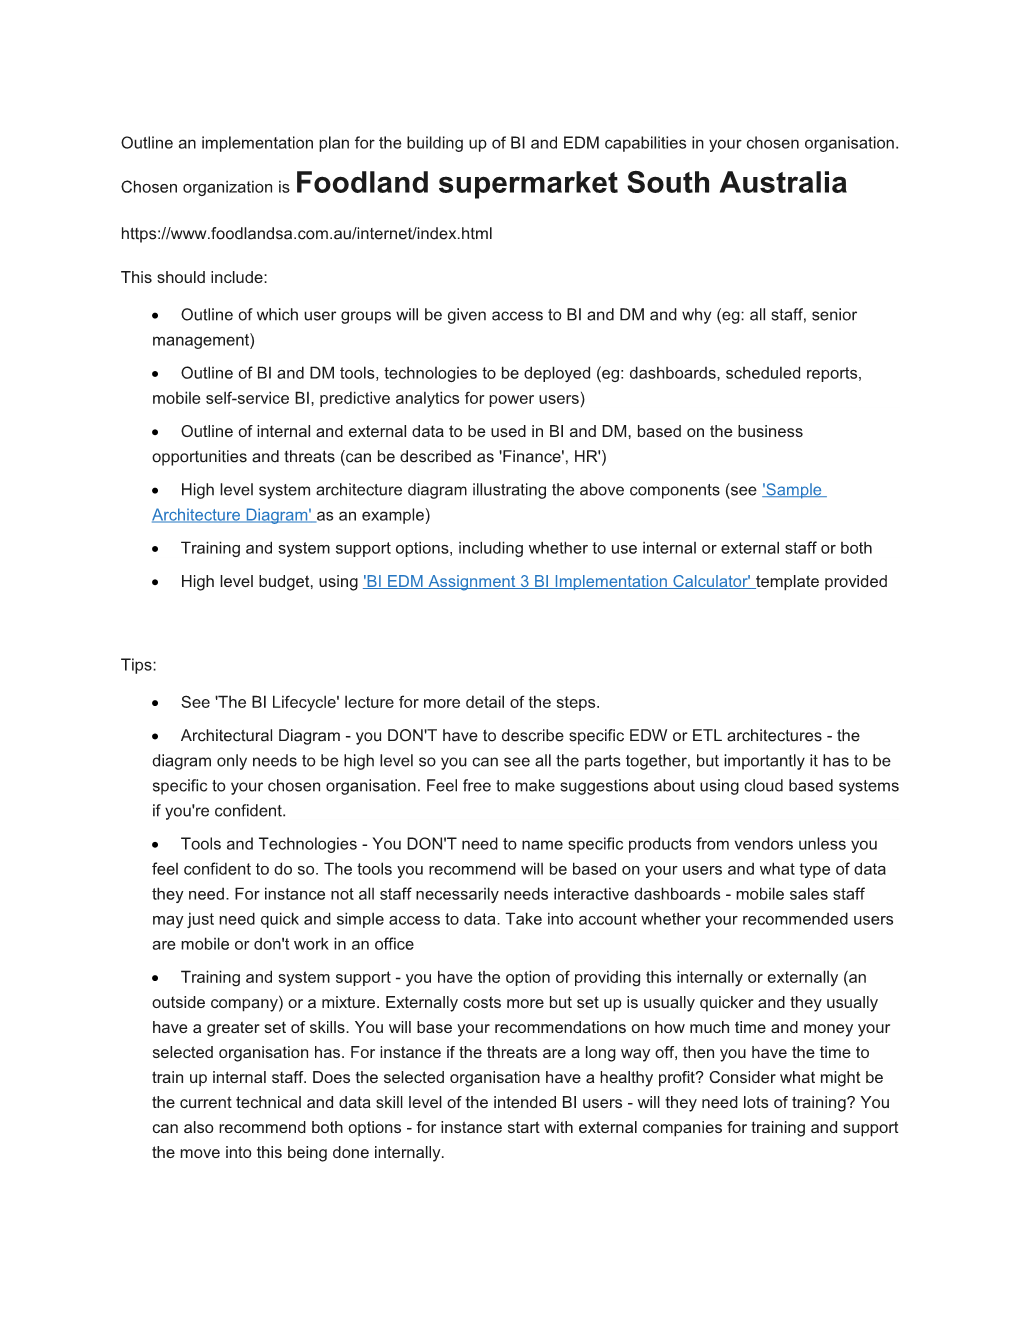 Chosen Organization Is Foodland Supermarket South Australia